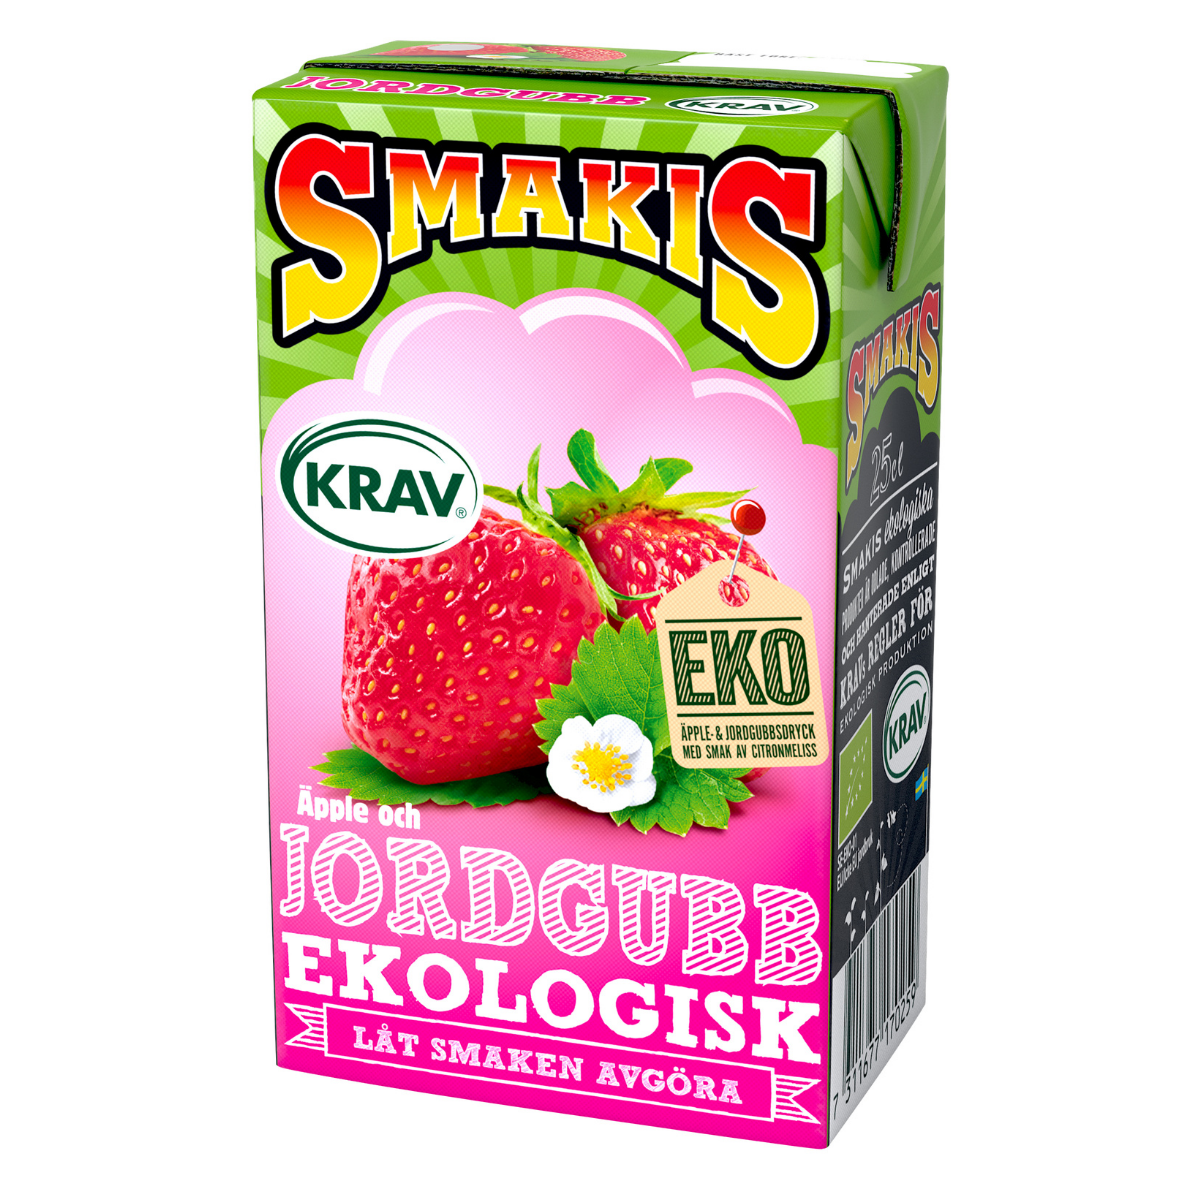 Smakis's Erdbeergetränk'